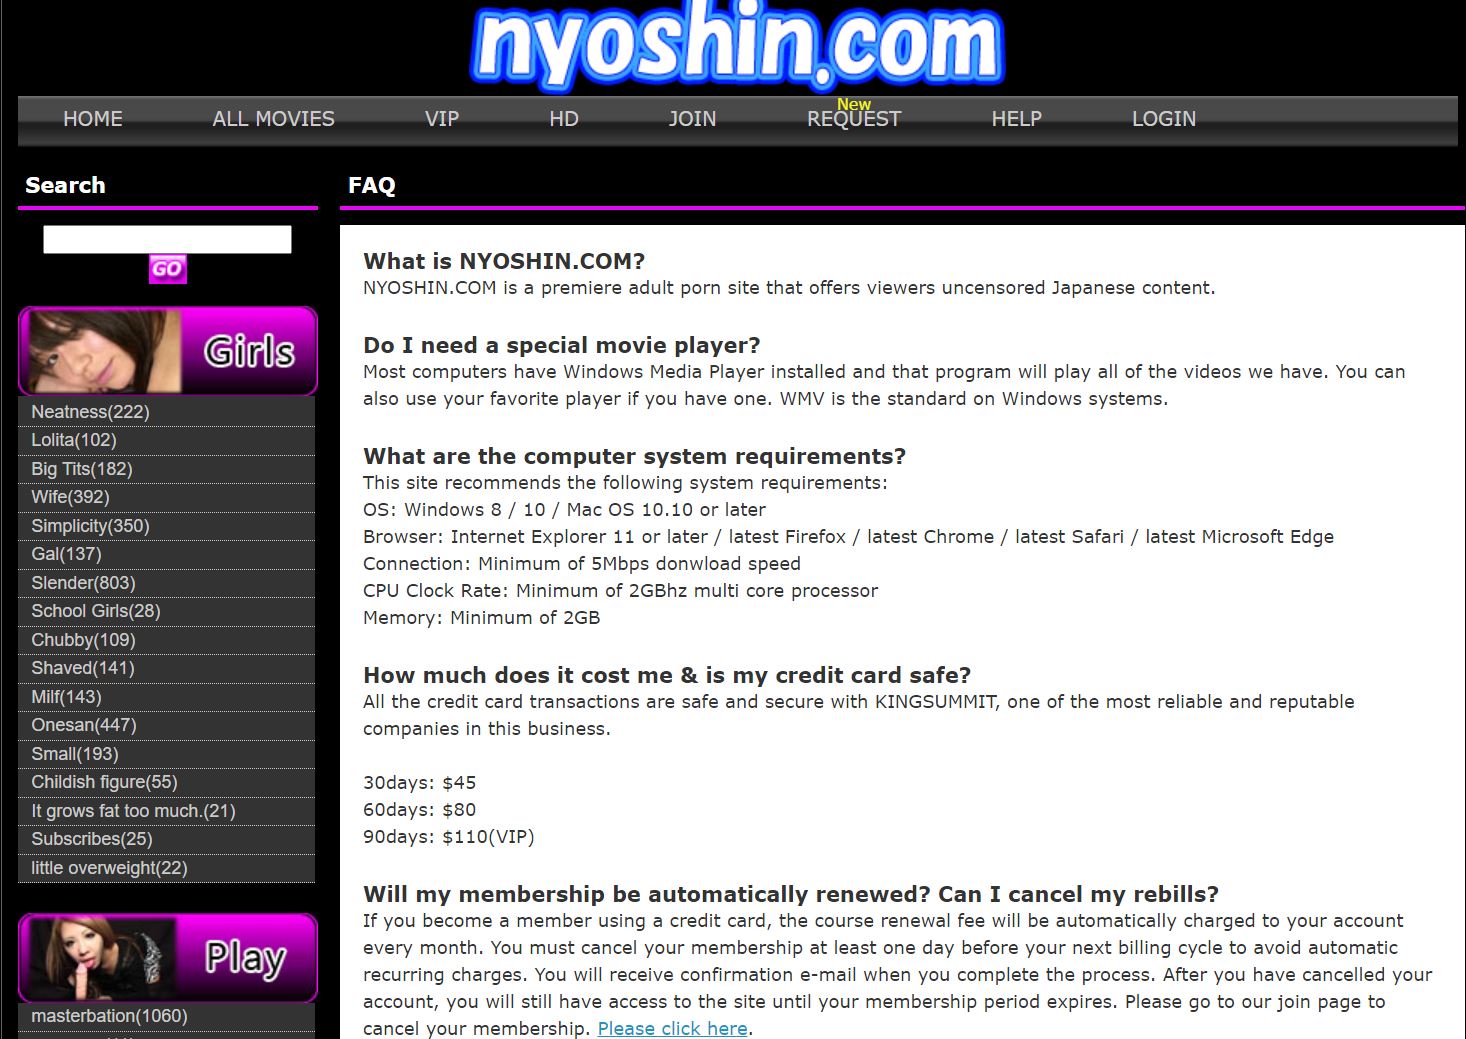 FAQ page on Nyoshin